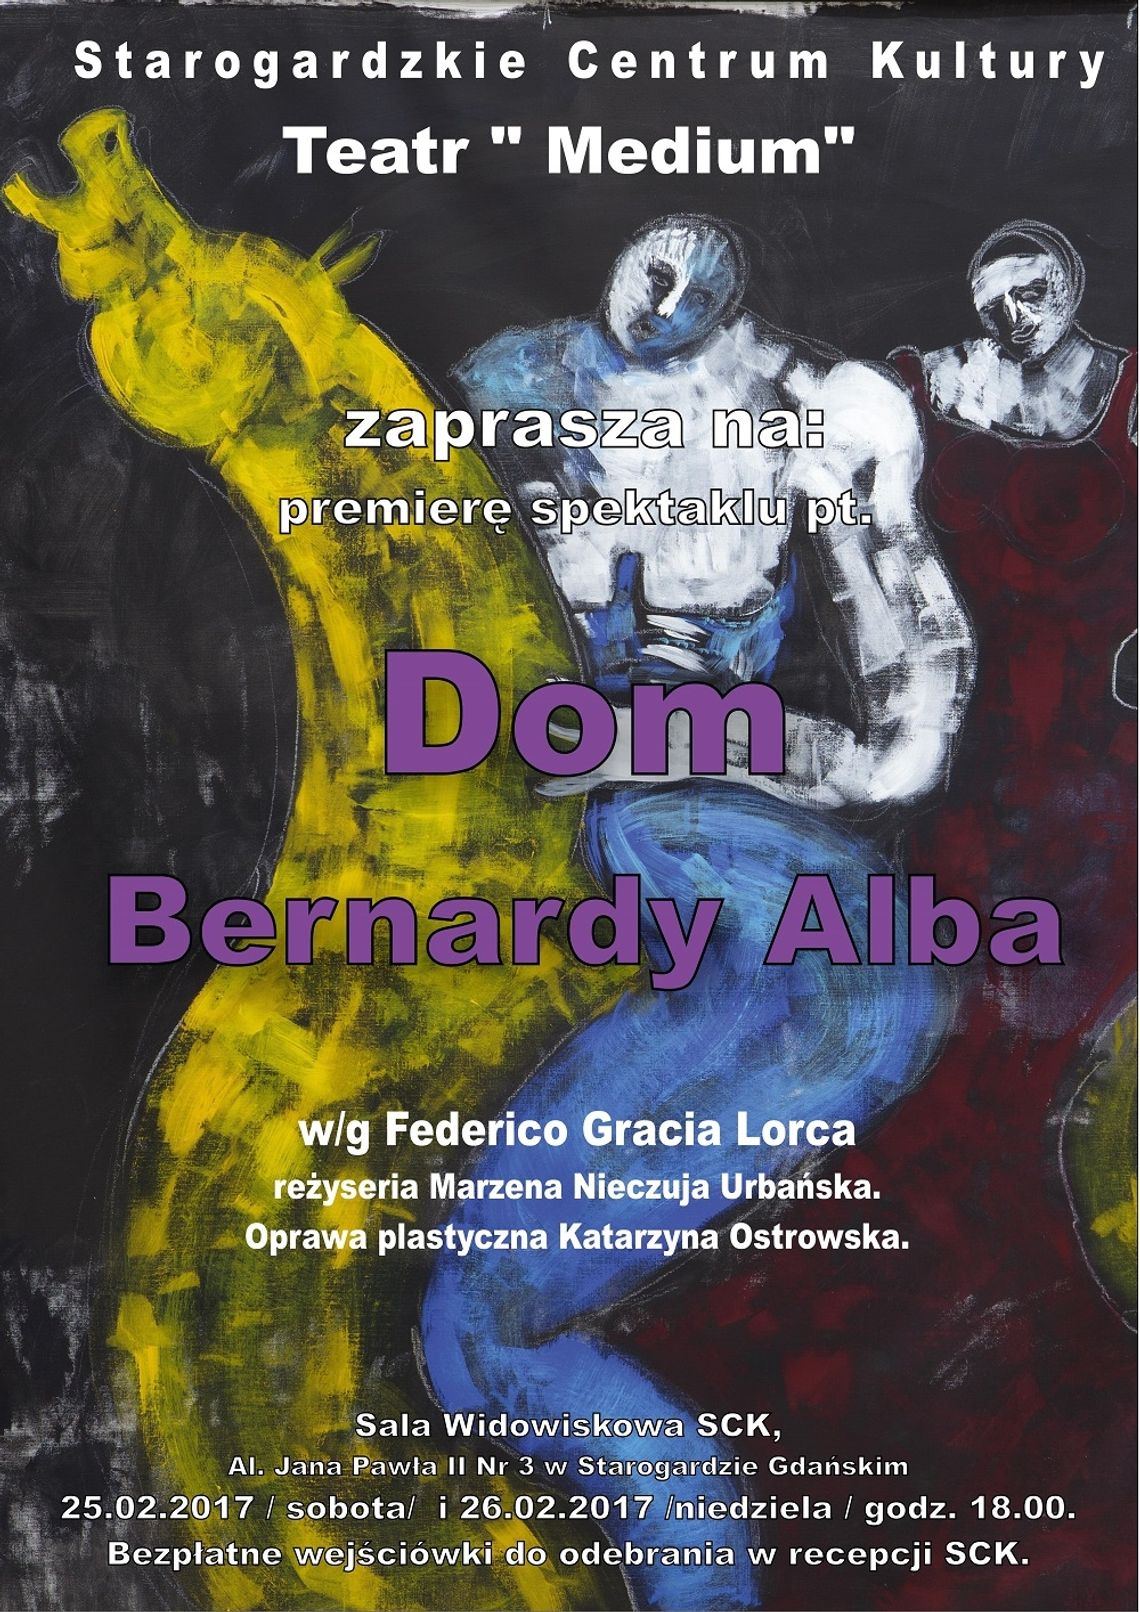 Premiera spektaklu Teatru Medium - "Dom Bernardy Alba" 